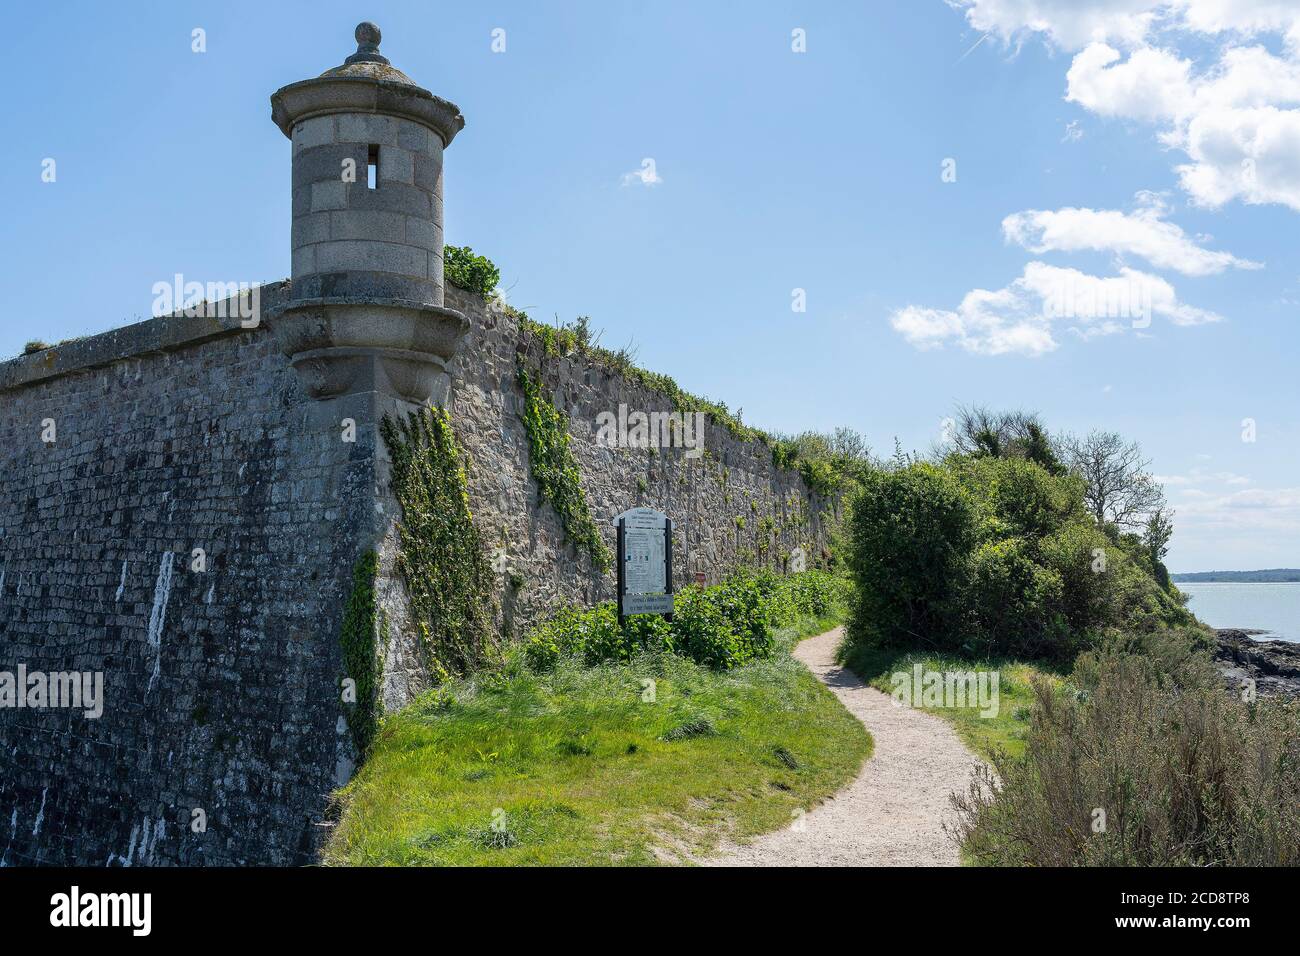 France, Manche, Saint-Vaast la Hougue, Fort de la Hougue listed as World Heritage by UNESCO Stock Photo